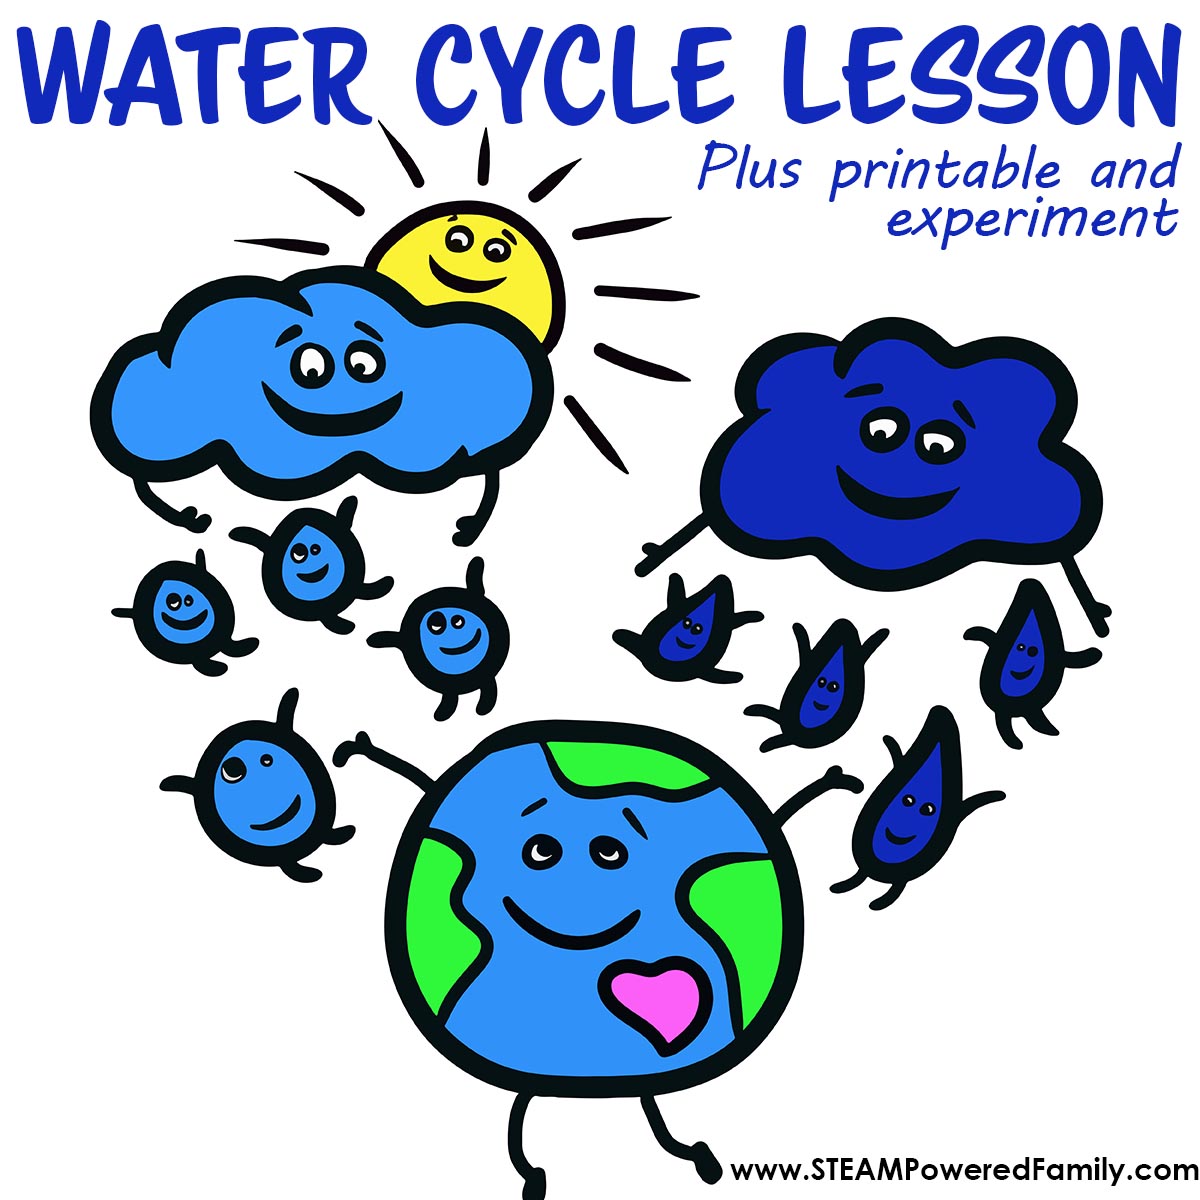 Water cycle diagram (evaporation, condensation, precipitation, runoff),  drawing. - SuperStock